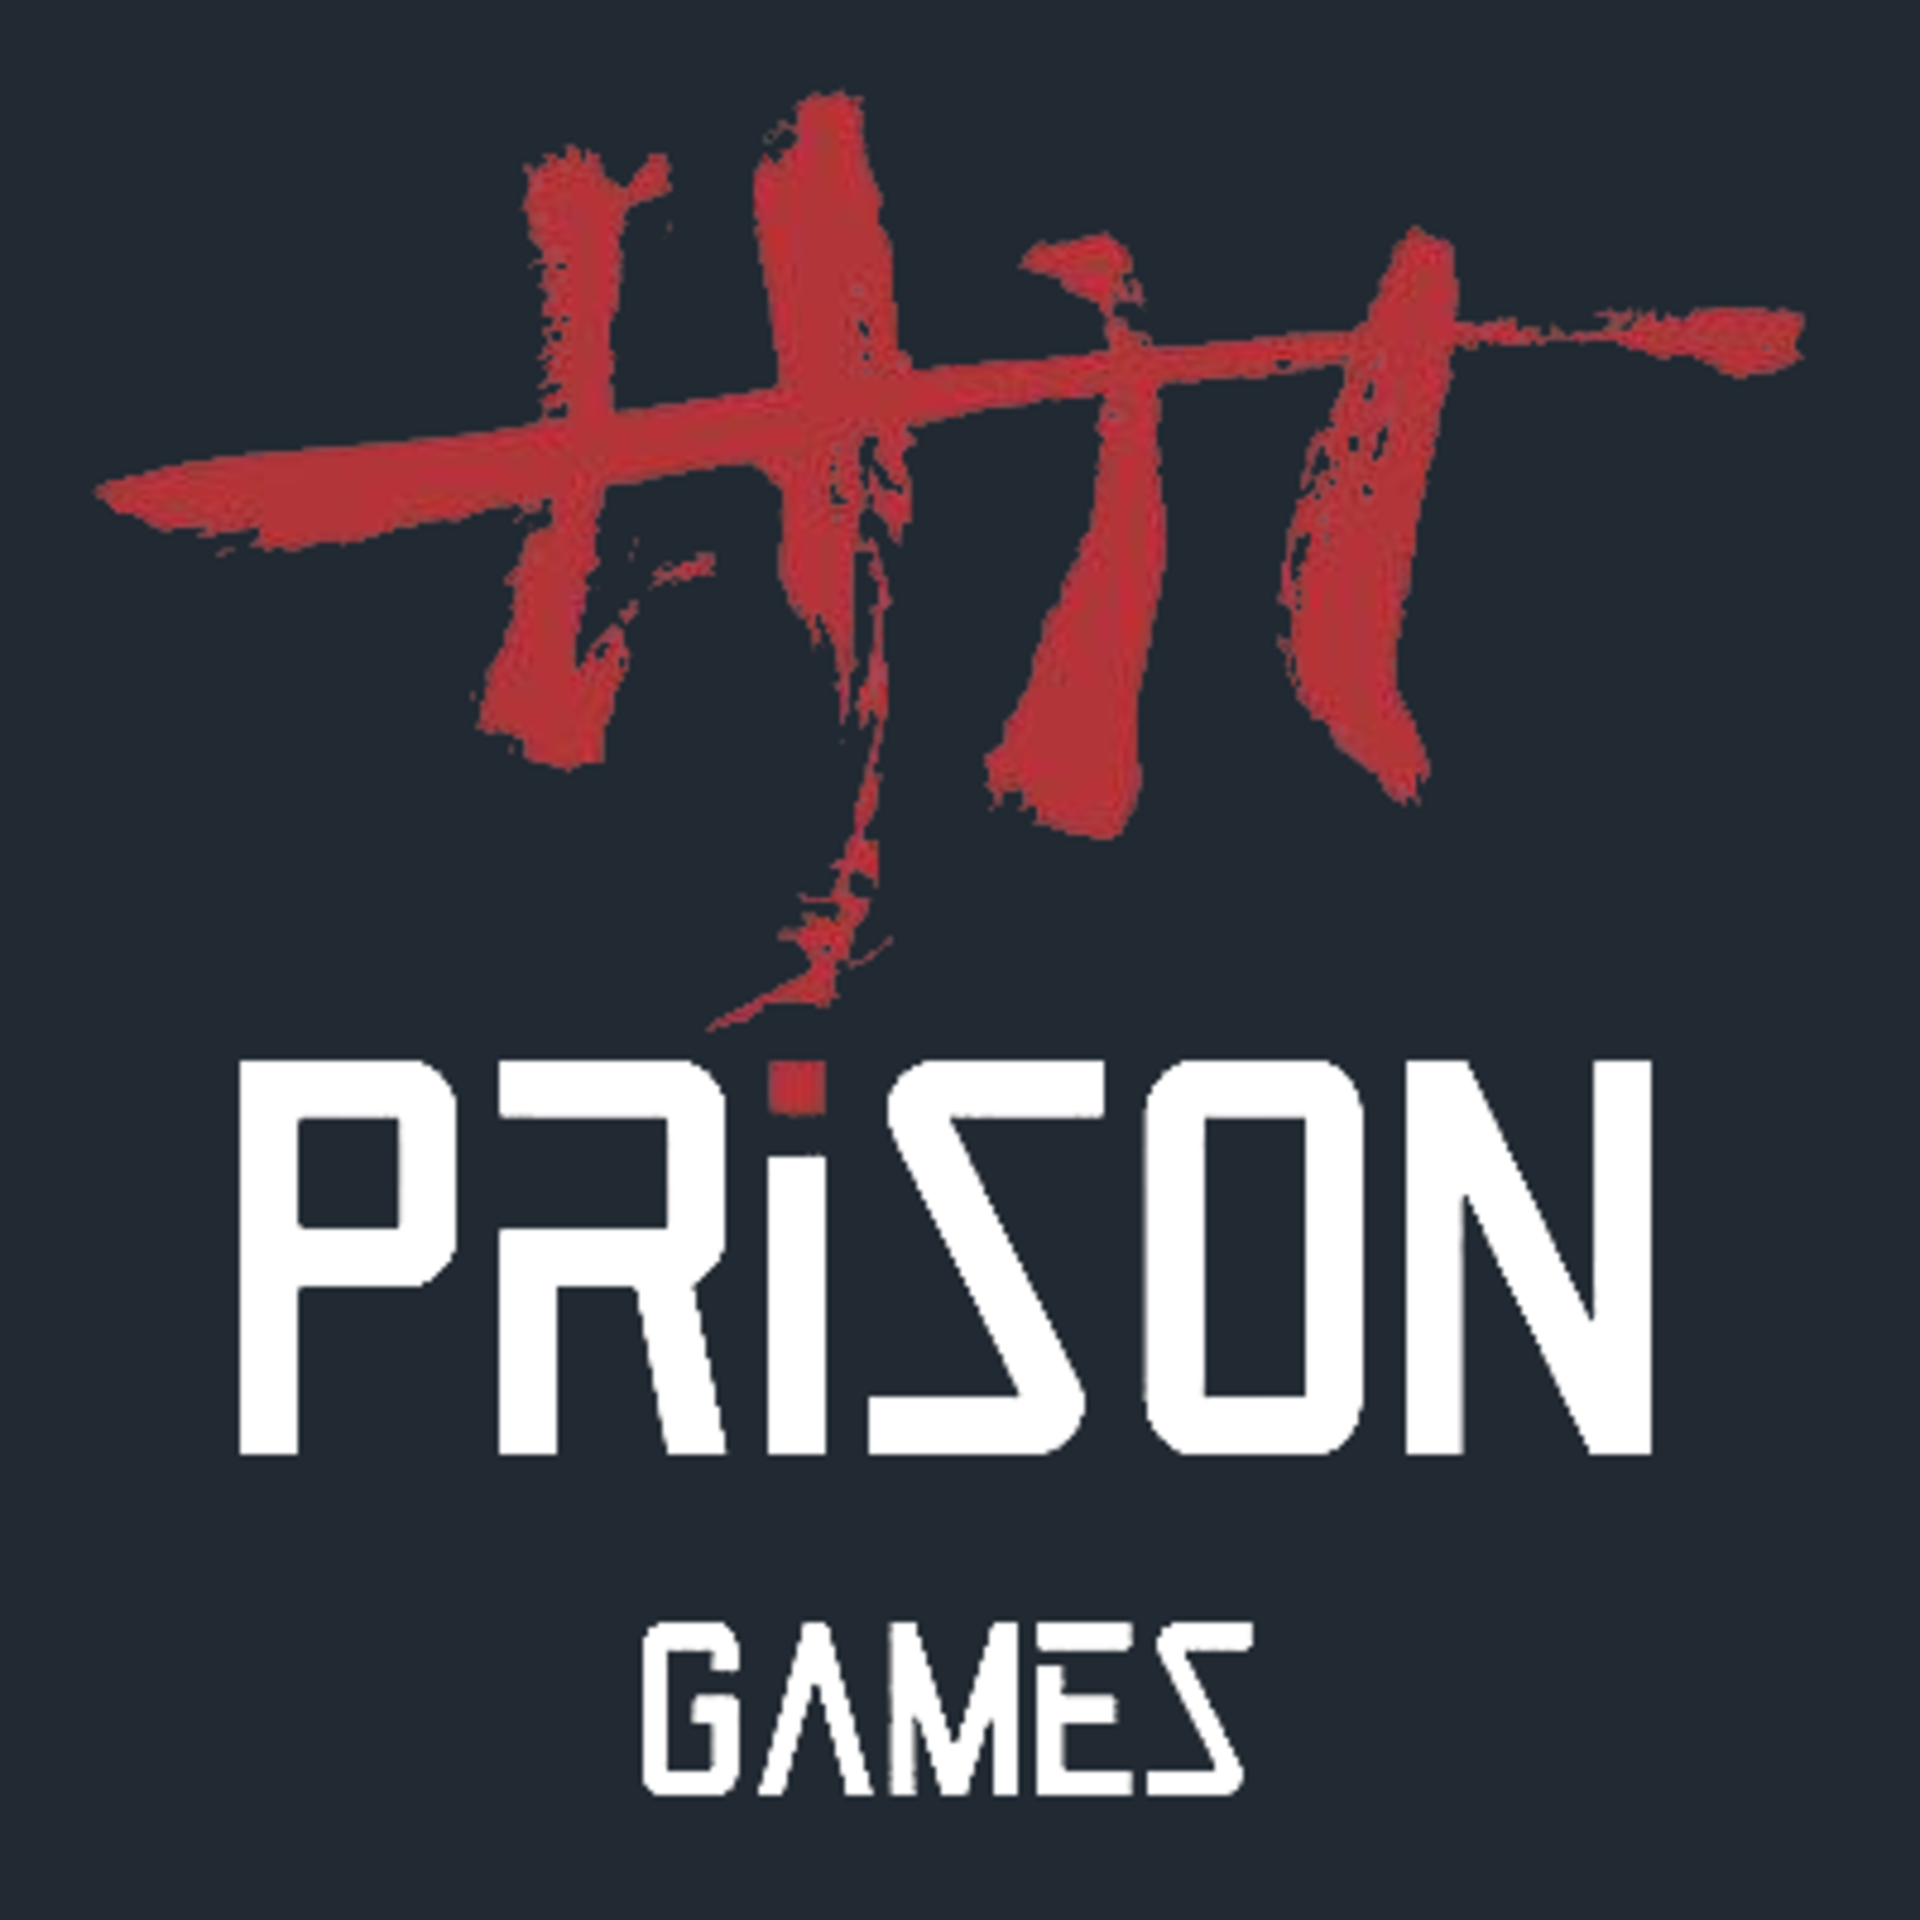 Prison Games}'s logo